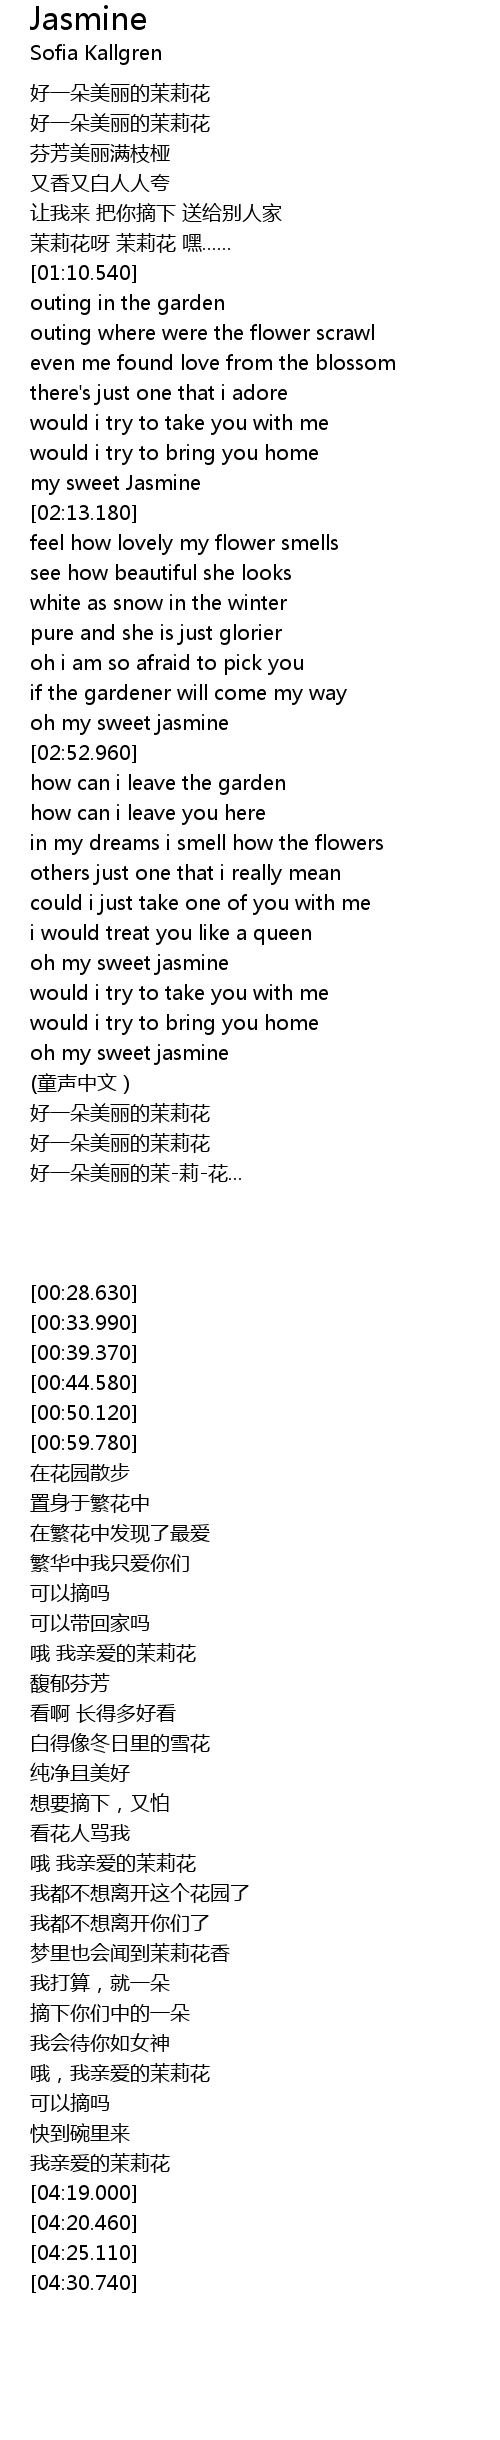 Jasmine Lyrics Follow Lyrics